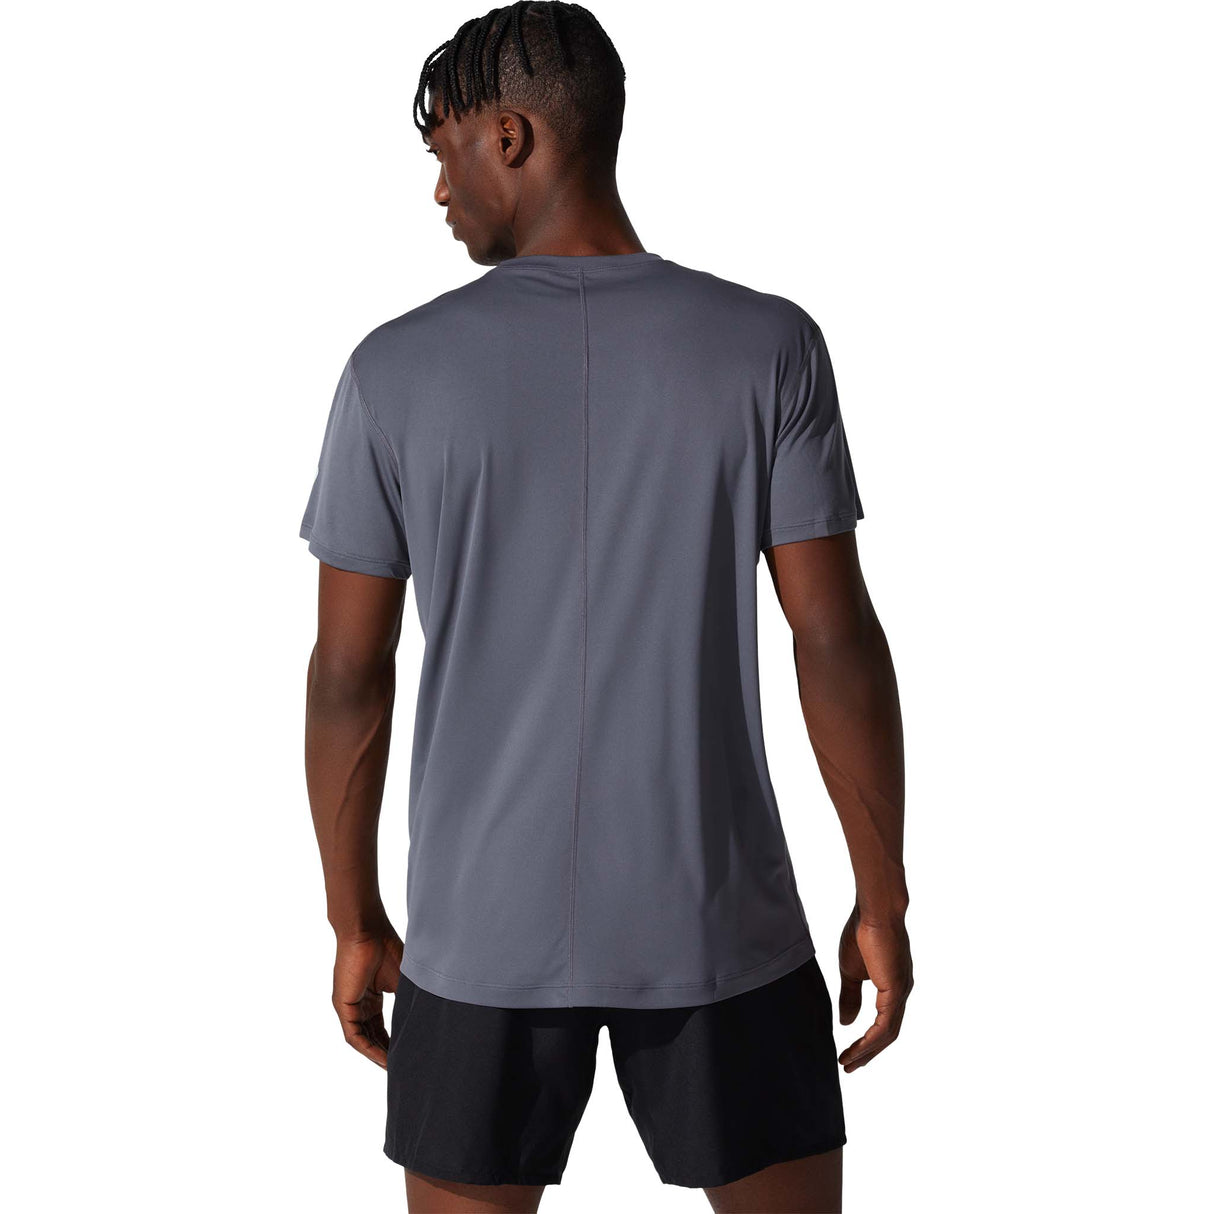 ASICS Silver T-shirt sport à manches courtes carrier grey performance black homme dos